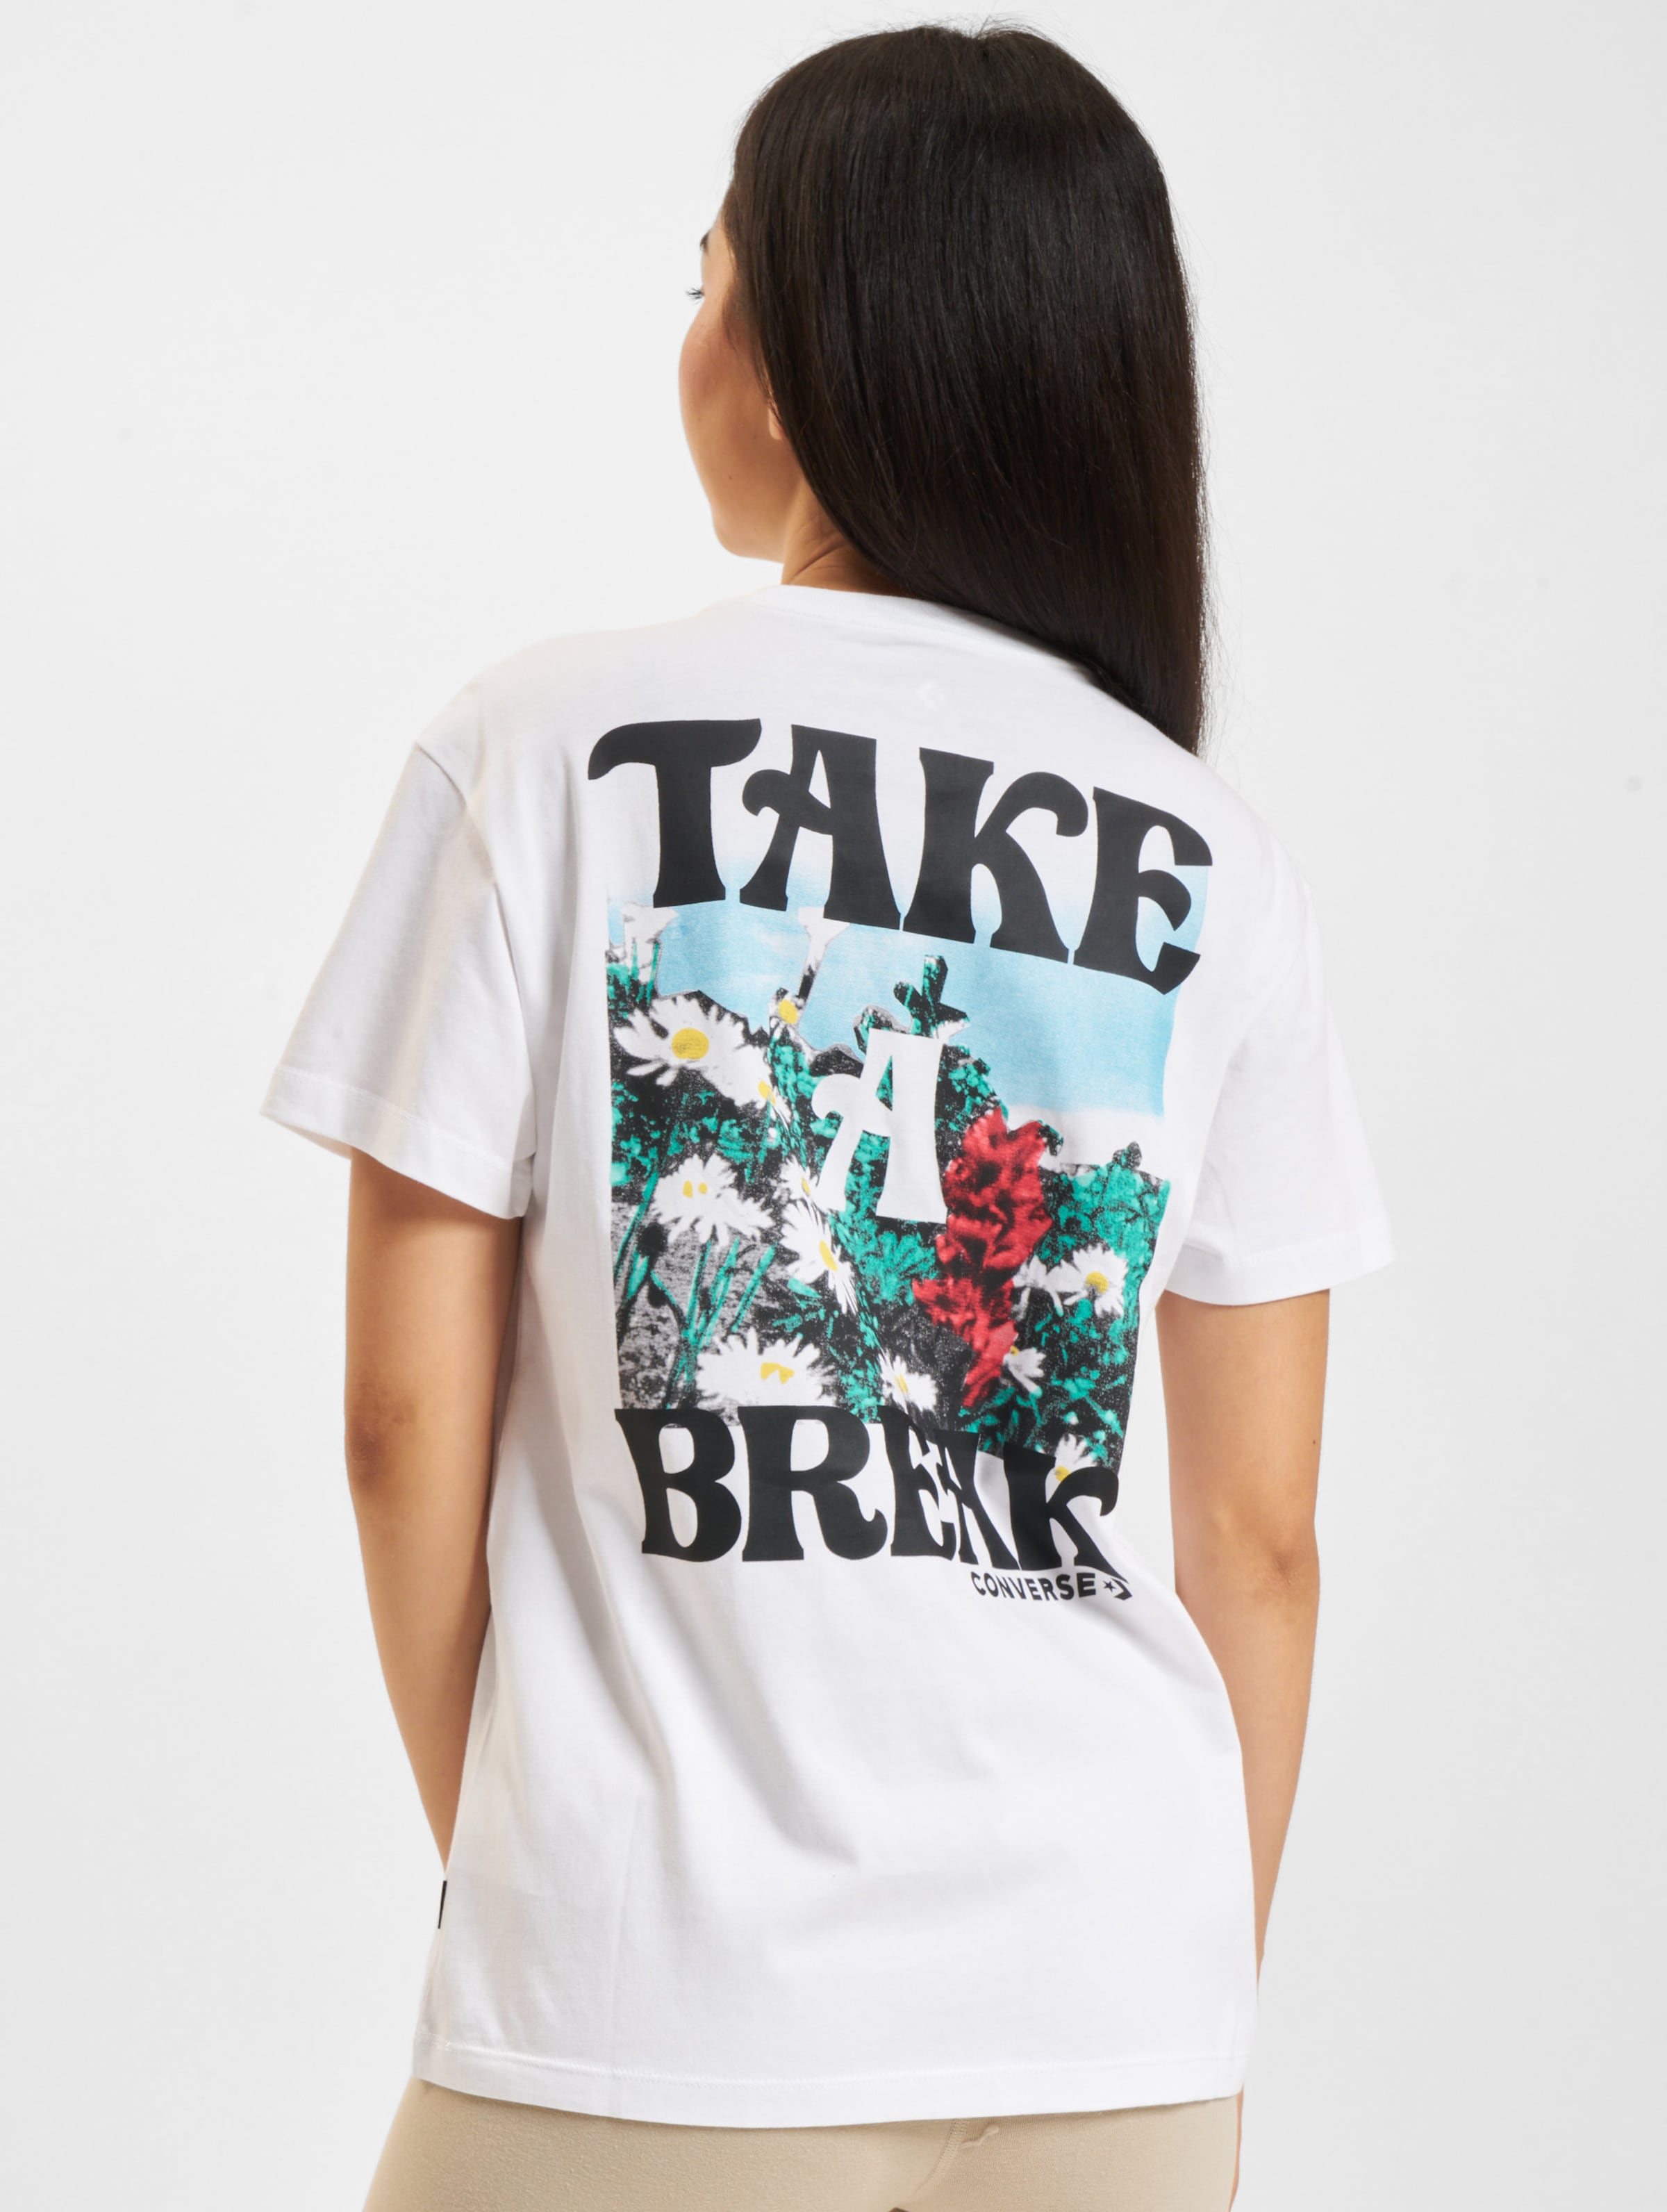 Converse Take A Break Slogan Relaxed T-Shirt Frauen,Unisex op kleur wit, Maat XS